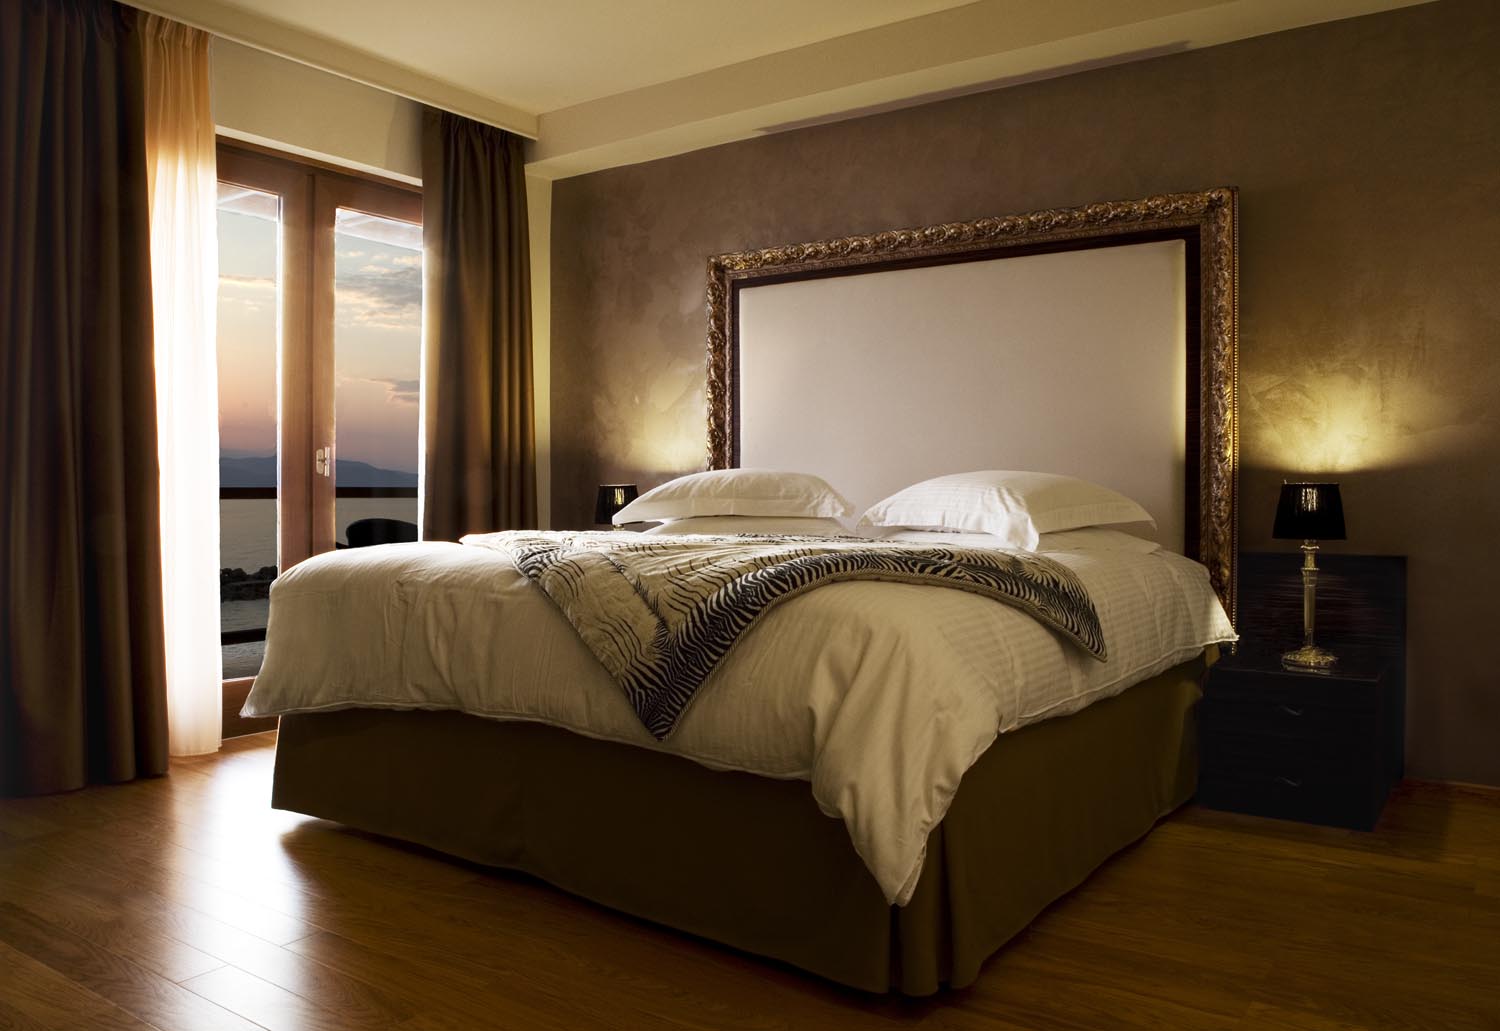 5* Valis Resort Hotel - Βόλος ✦ -50% ✦ 2 Ημέρες (1 Διανυκτέρευση) ✦ 2 άτομα + 1 παιδί έως 12 ετών ✦ 8 ✦ έως 28/02/2022 ✦ Ένα Αyurveda Massage διαρκείας 15 λεπτών!